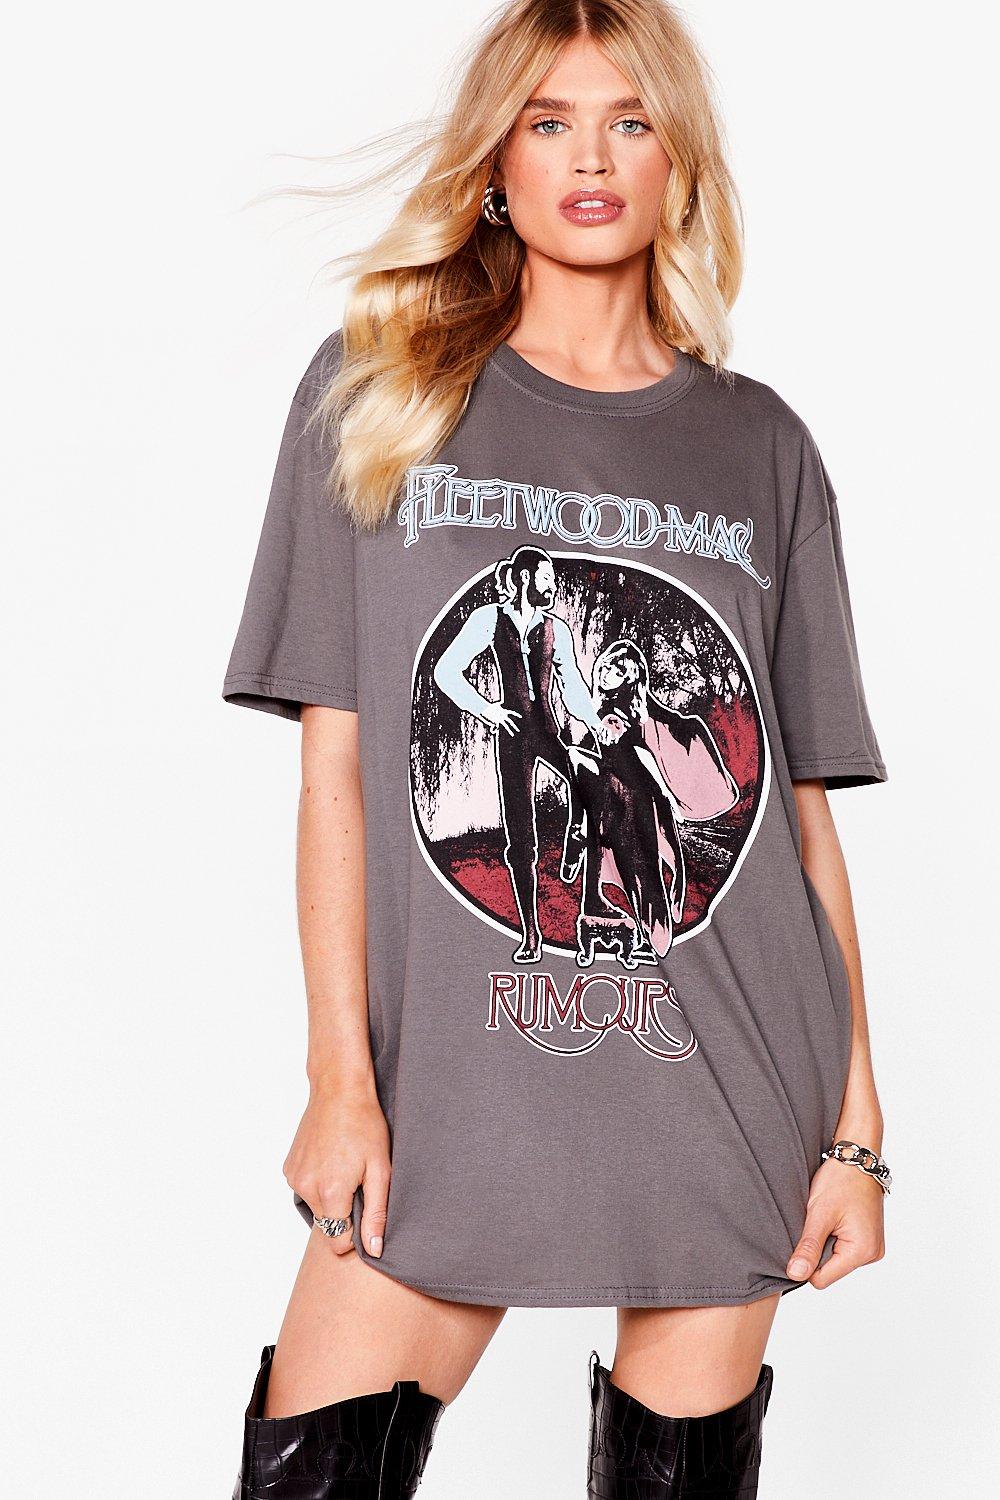 Fleetwood Mac Vintage T-Shirt Dress ...